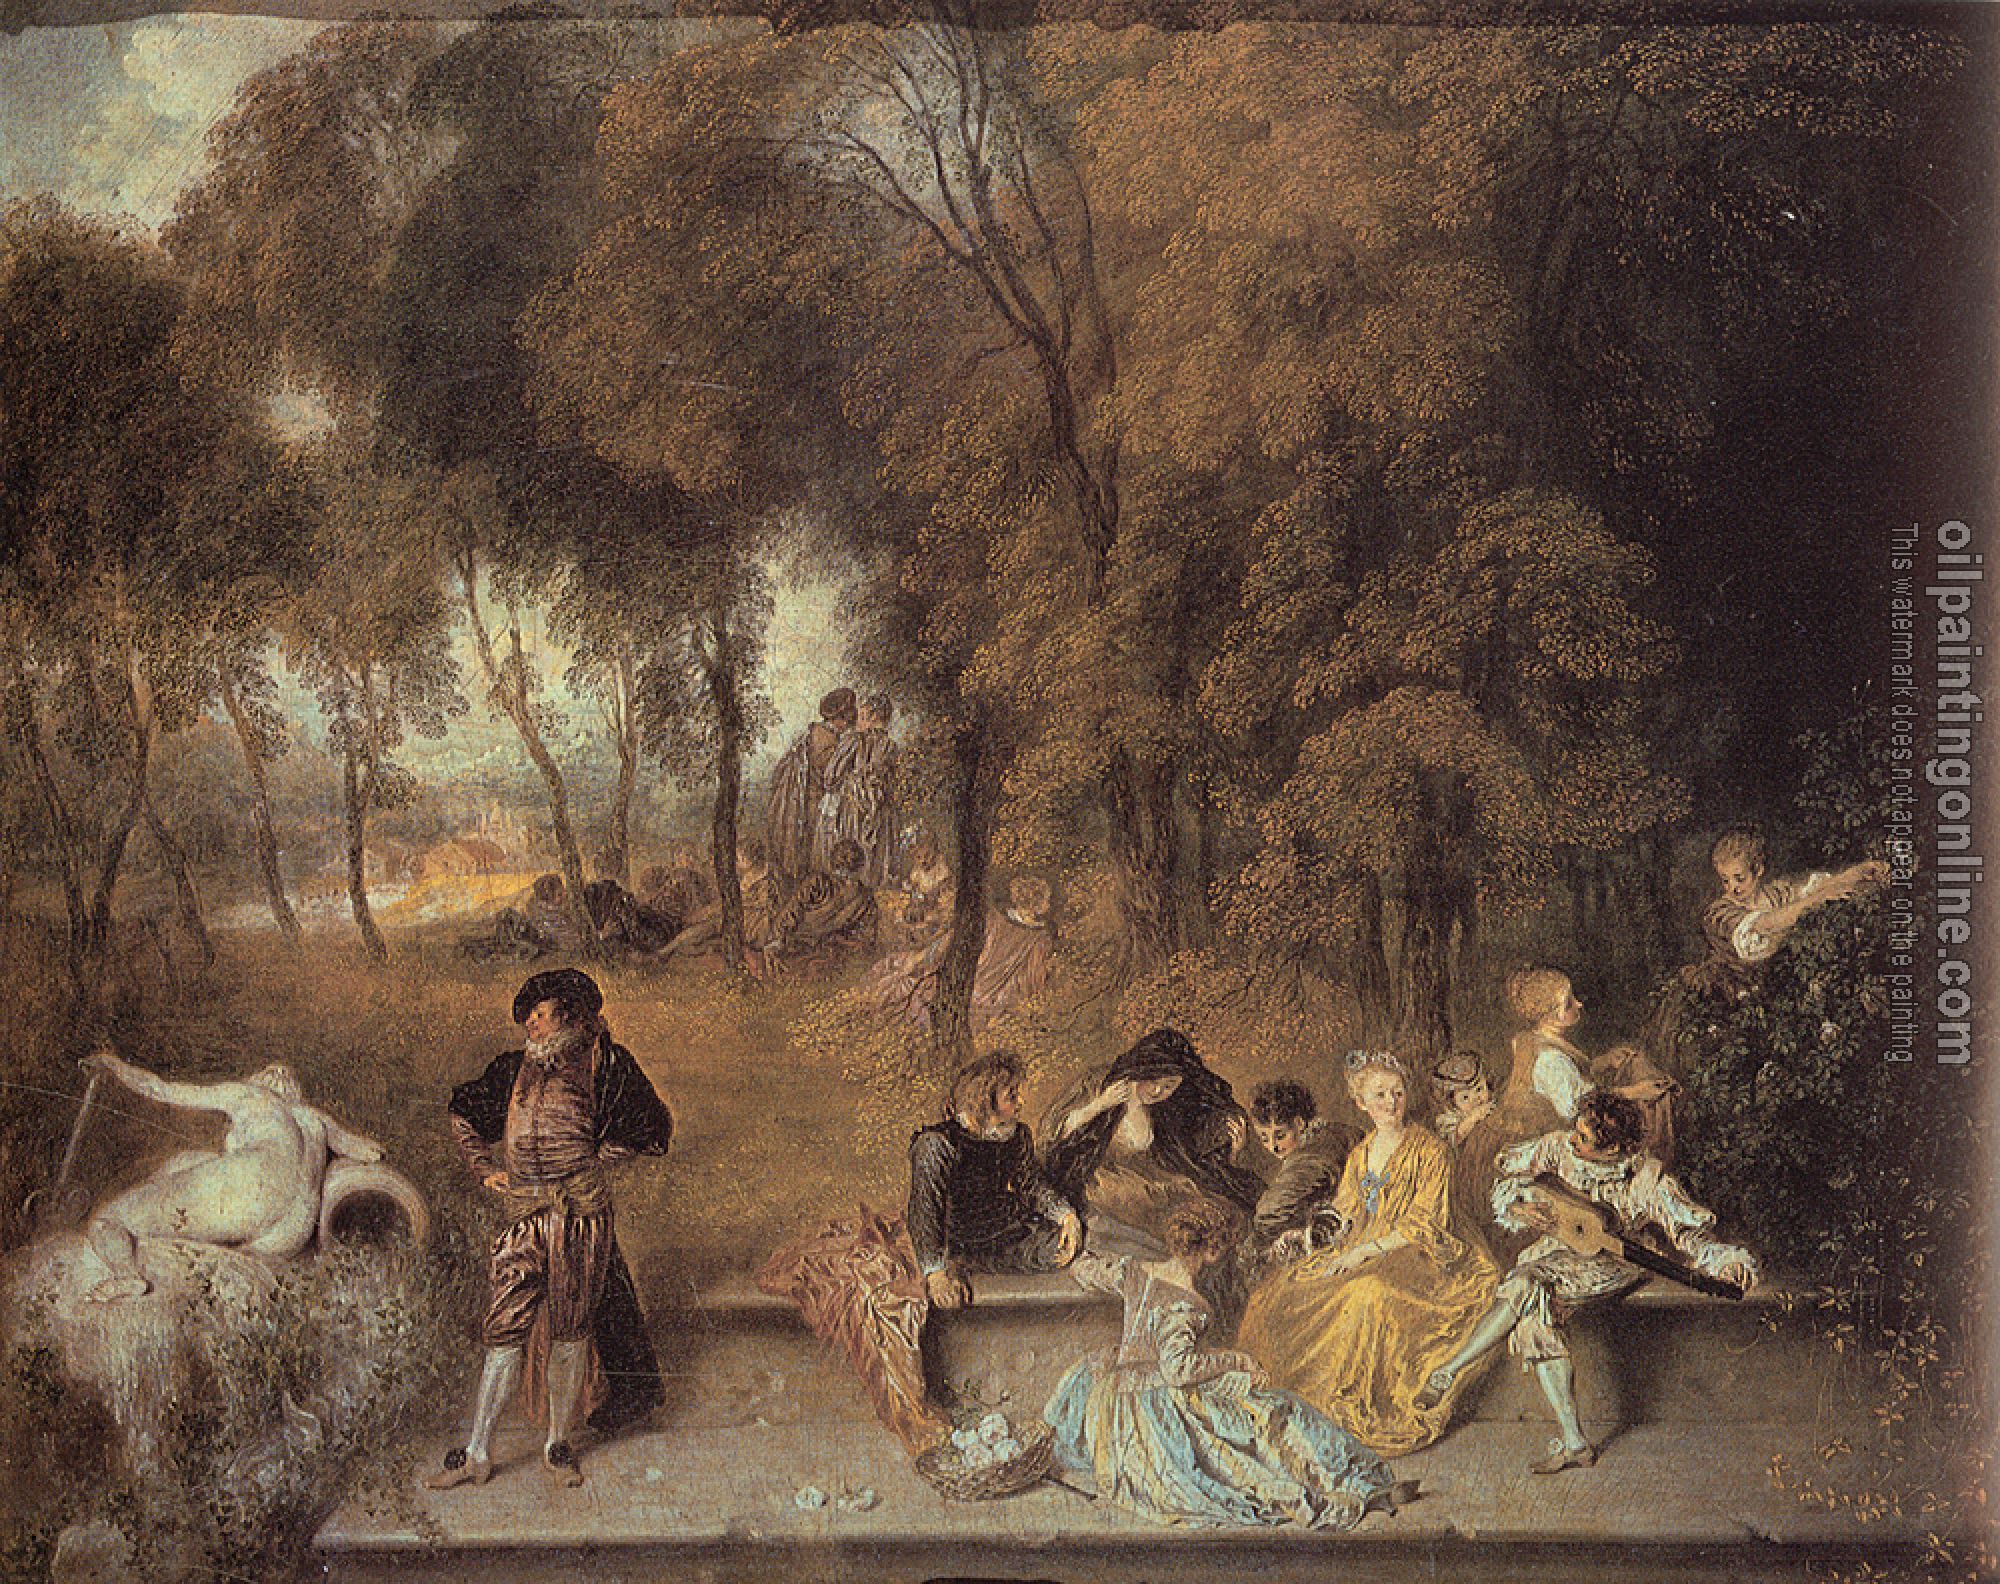 Watteau, Jean-Antoine - Merry Company in the Open Air